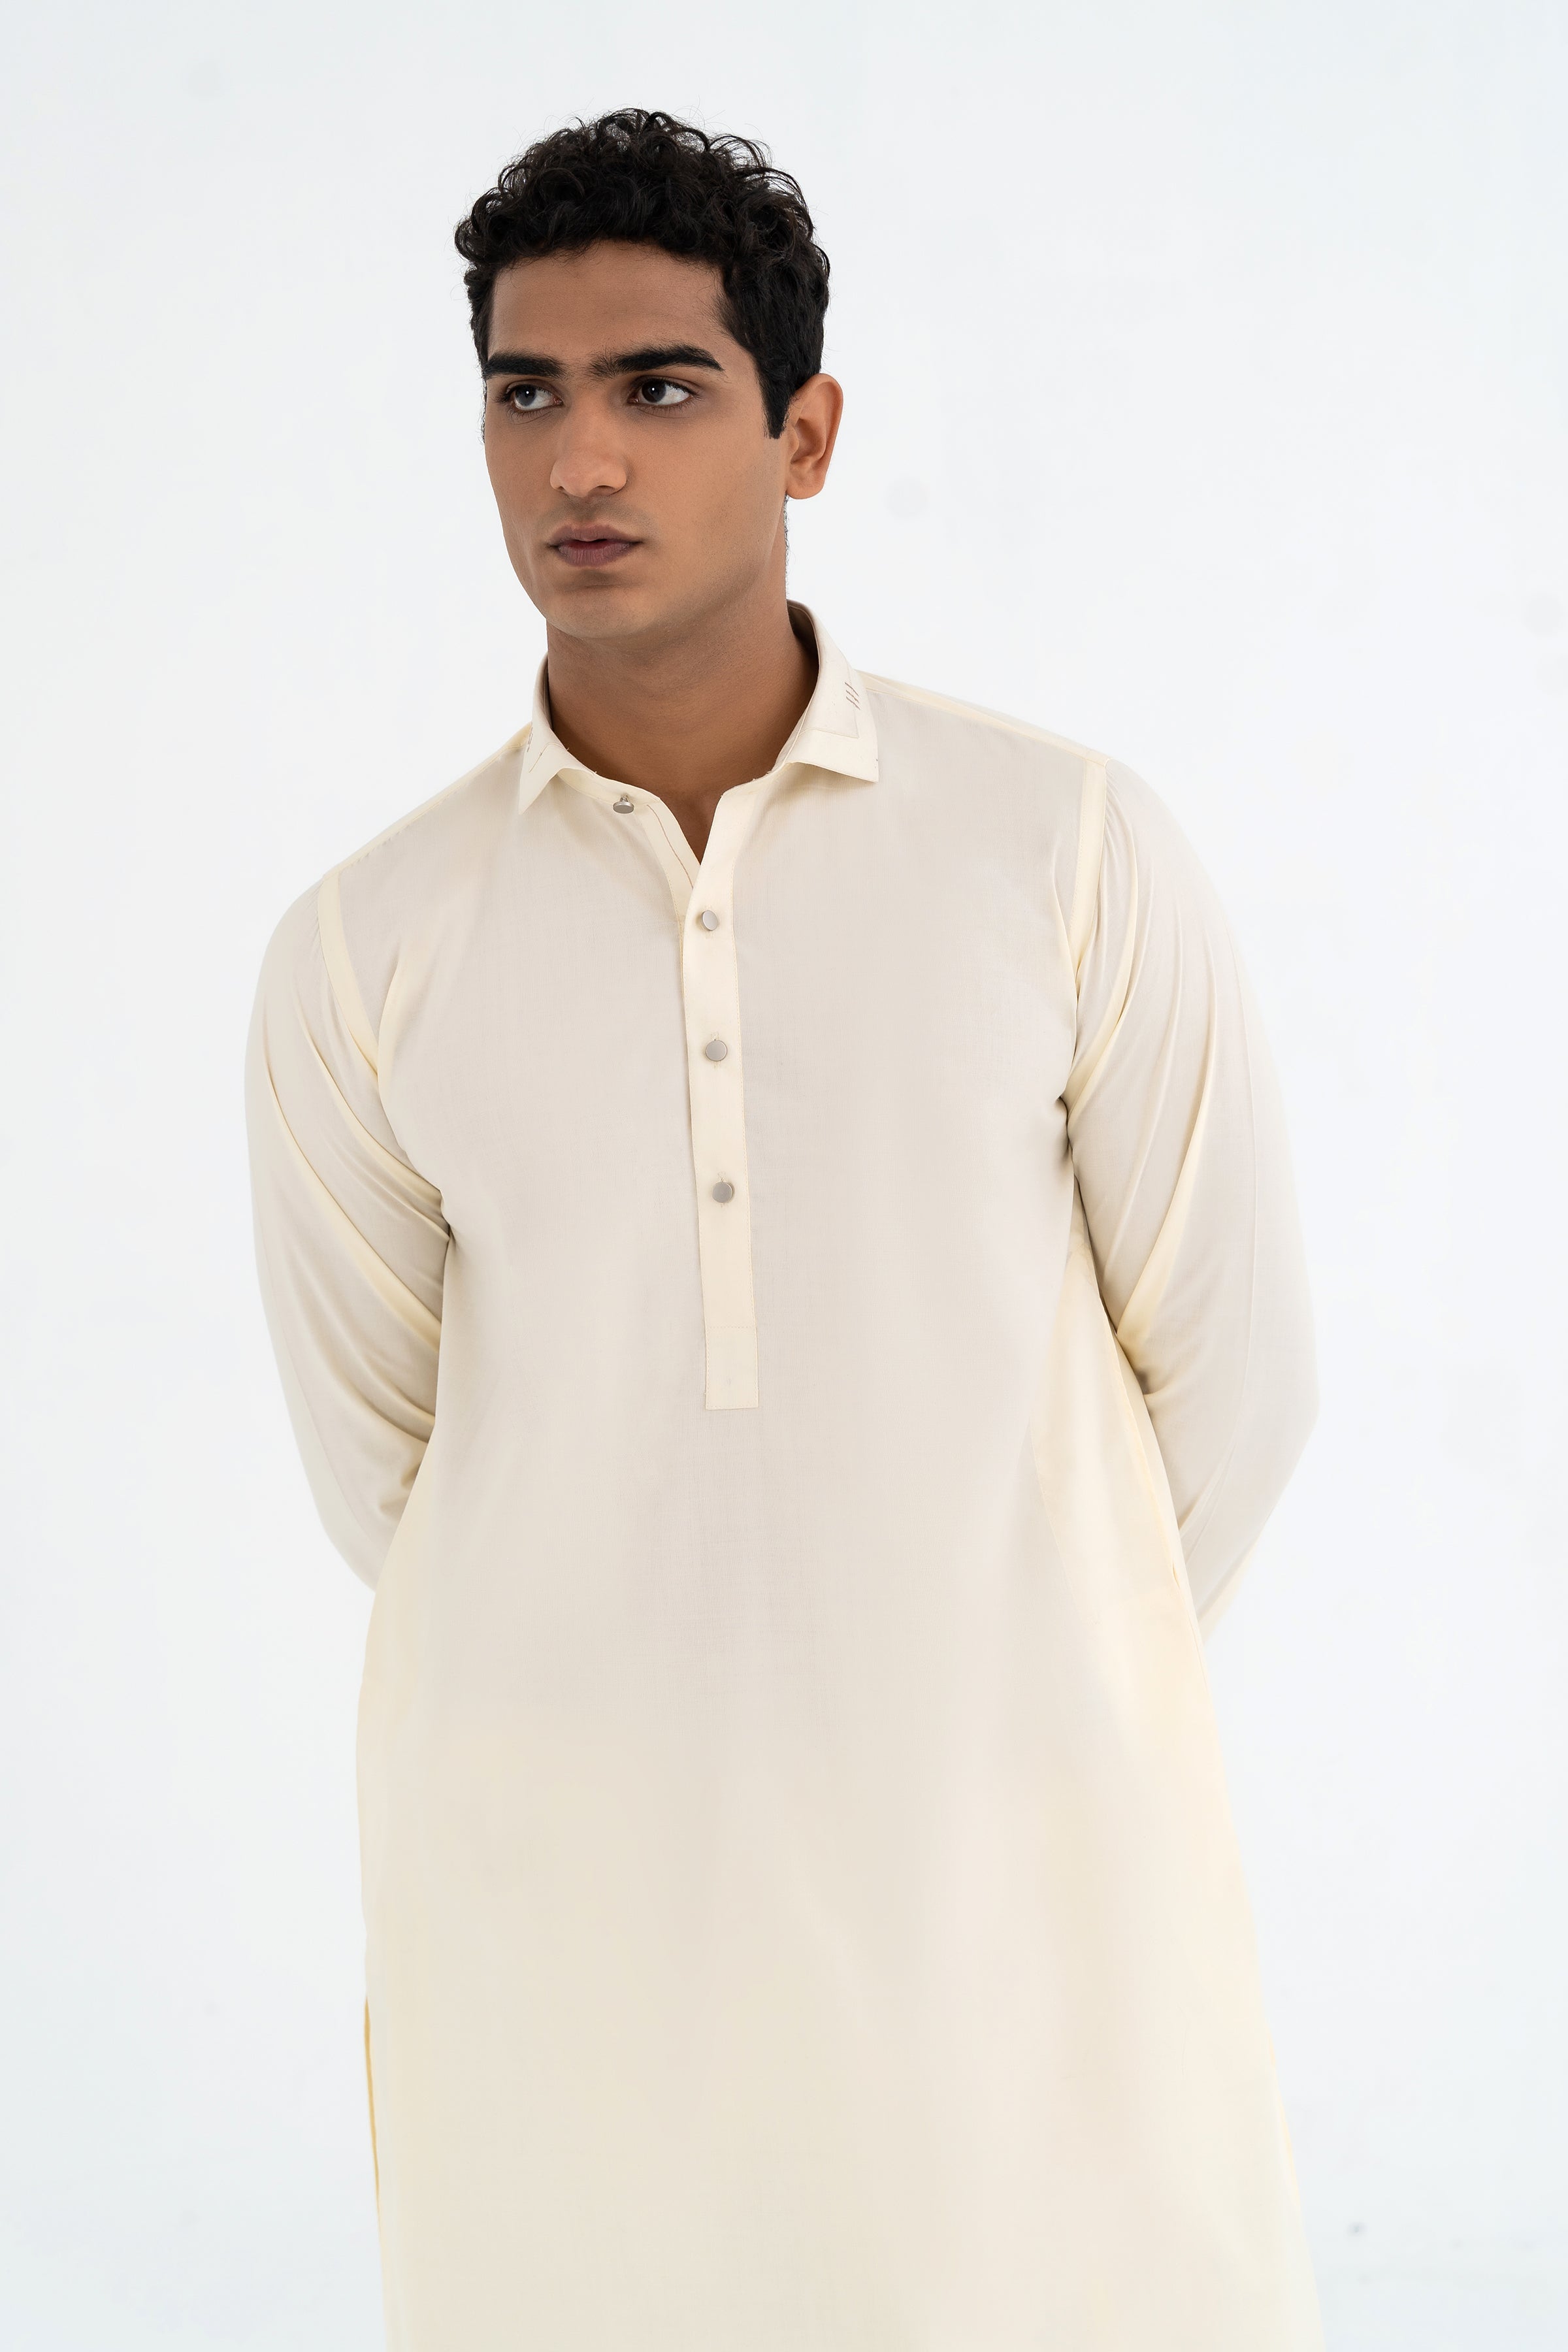 online shalwar kameez shopping in Pakistan